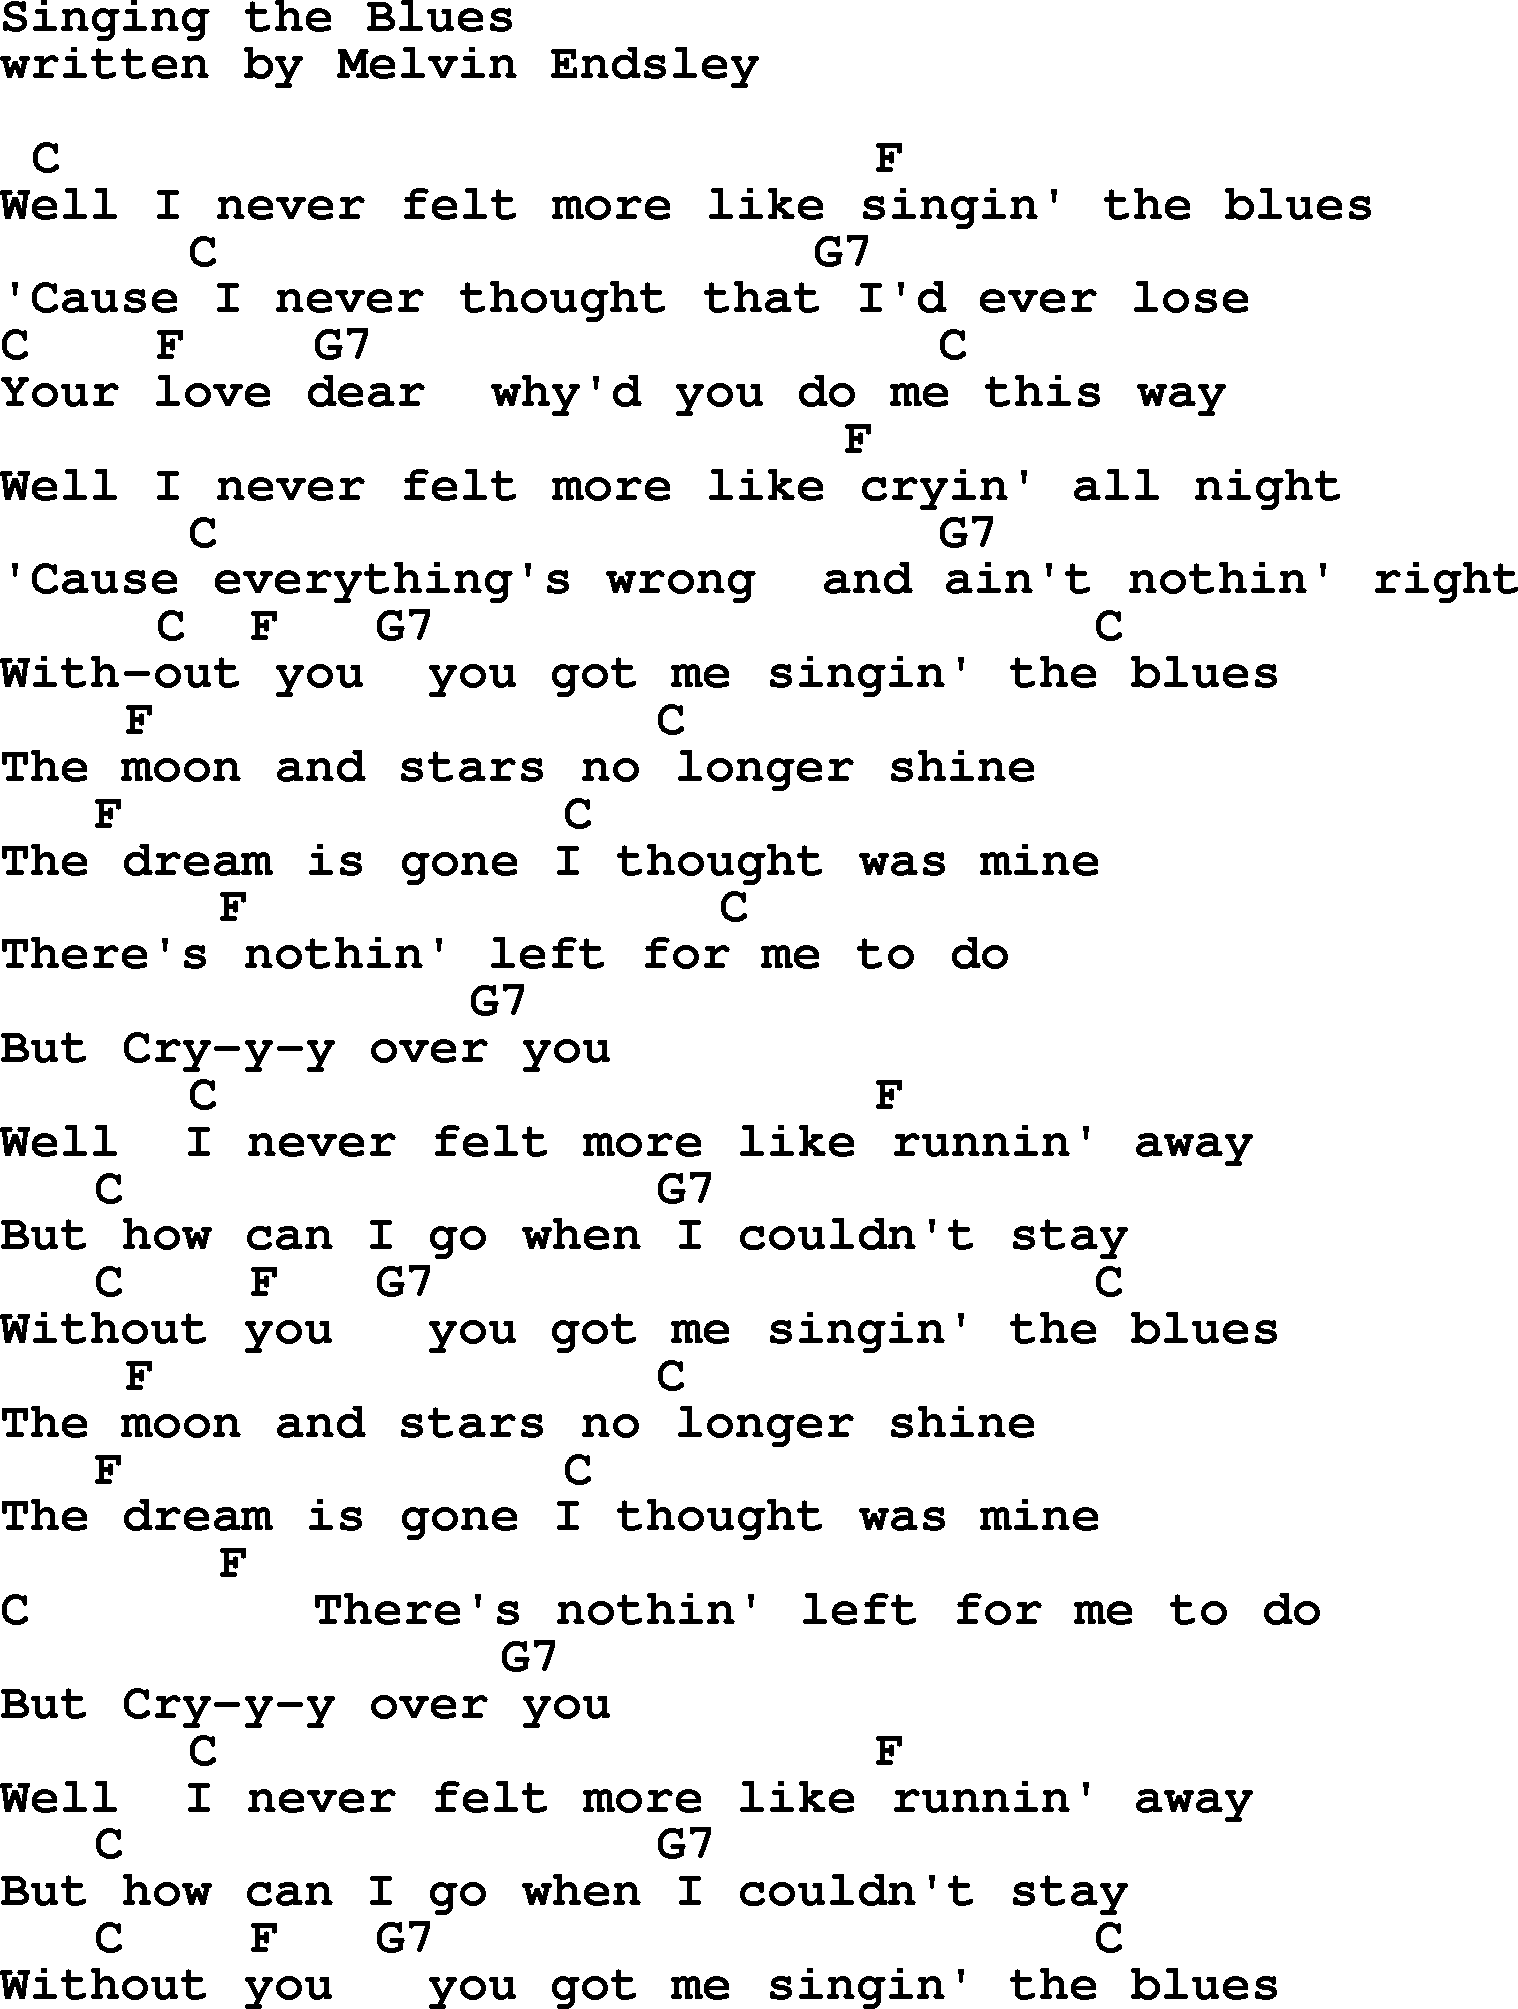 Marty Robbins song: Singing the Blues, lyrics and chords